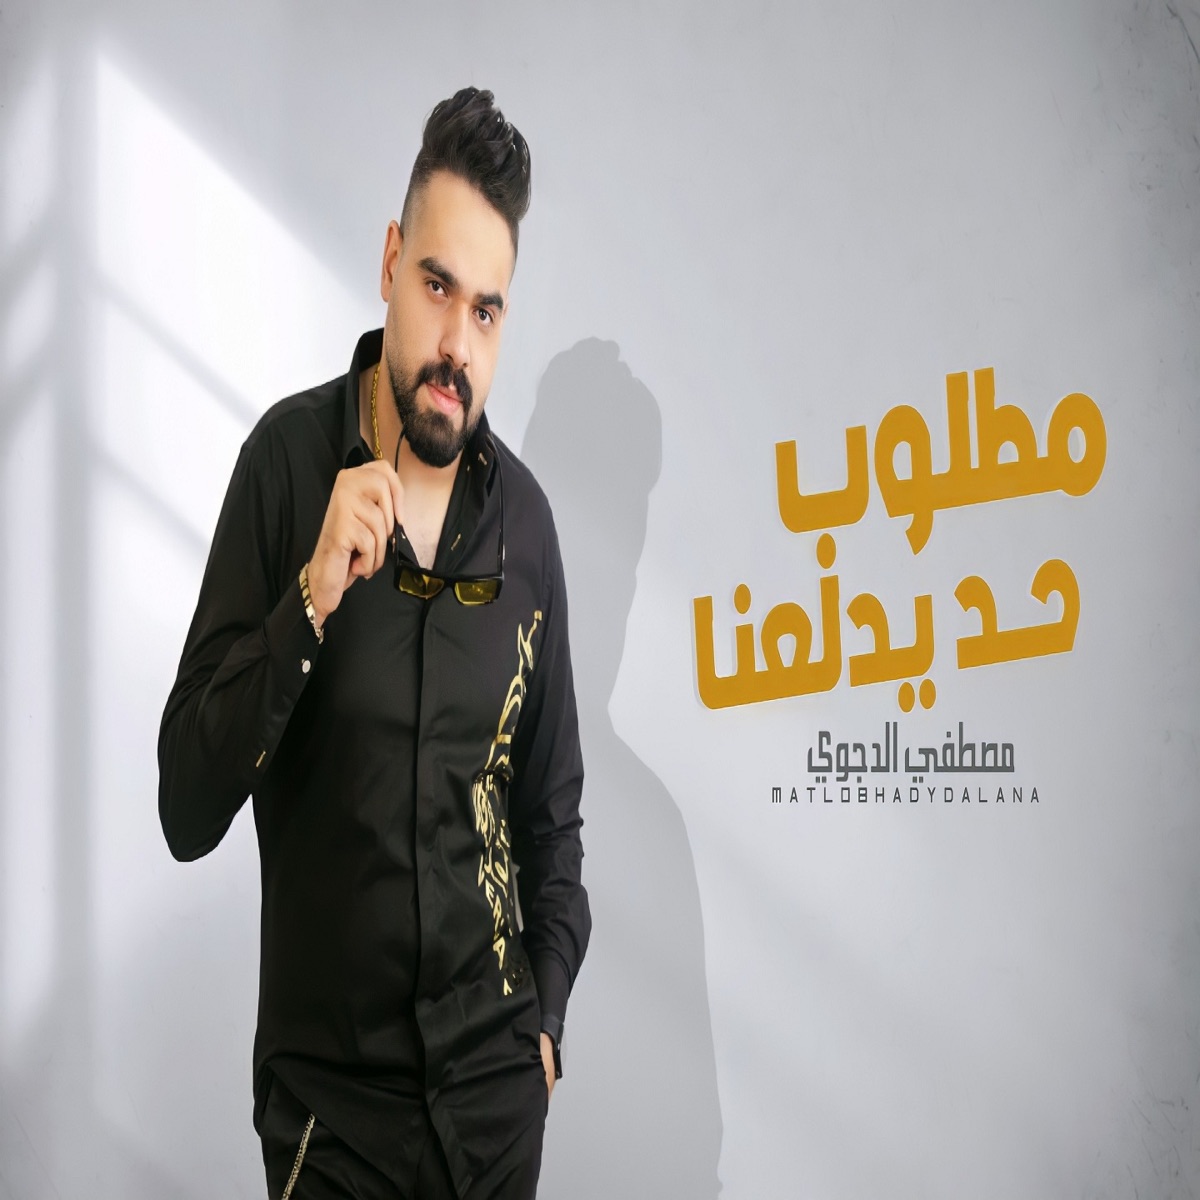 متغاظ عارفك يلا مننا متغاظ (feat. Mohamed Zizo) - Single - Album by مصطفي  الدجوي - Apple Music